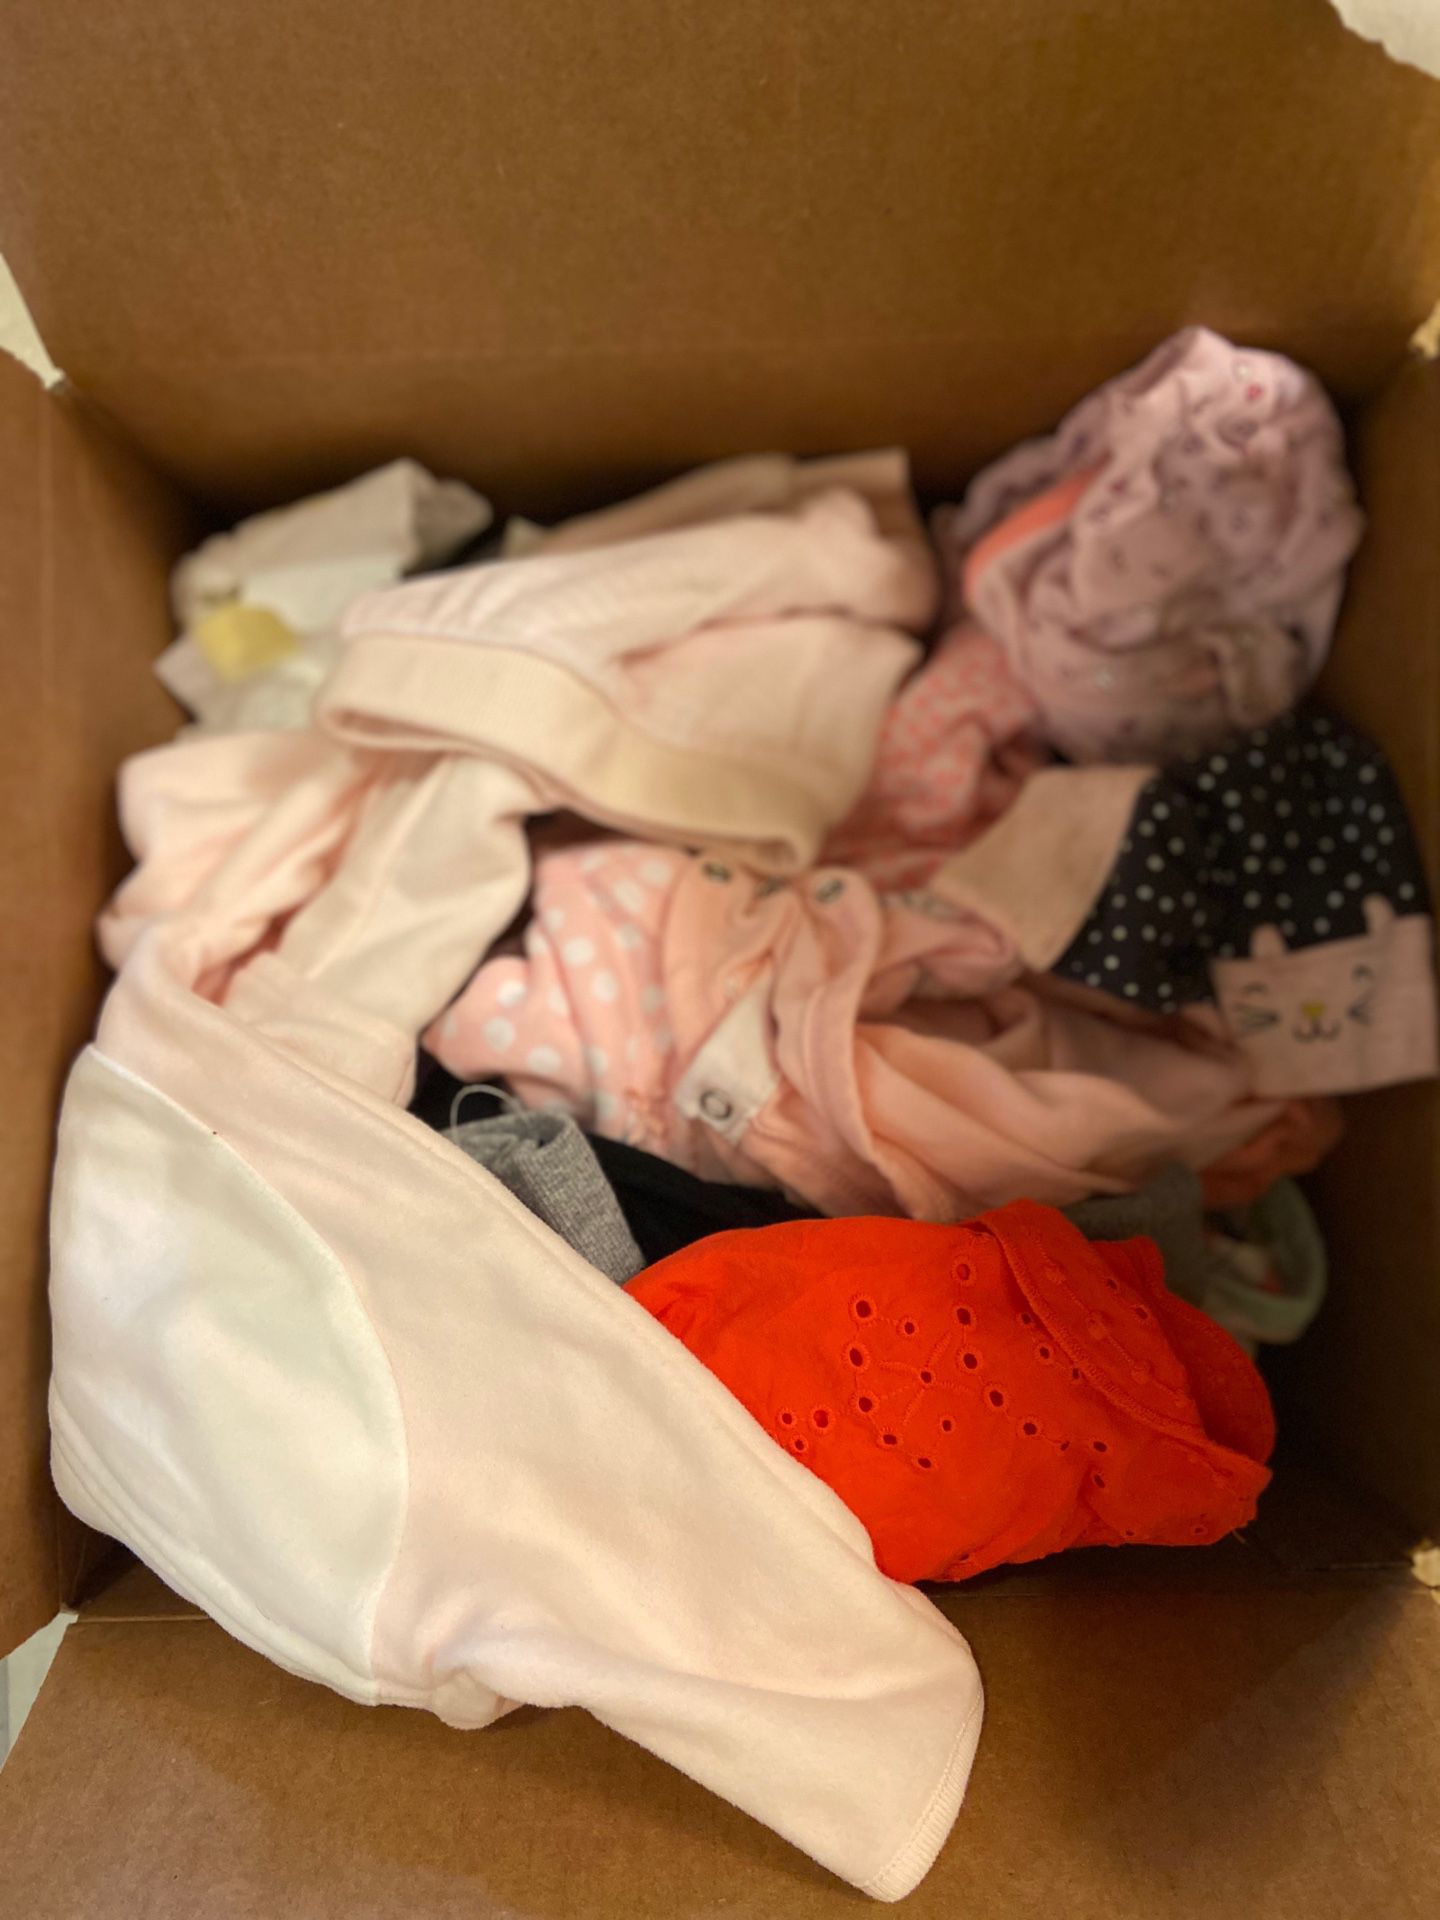 Baby clothes - newborn, some 3 months